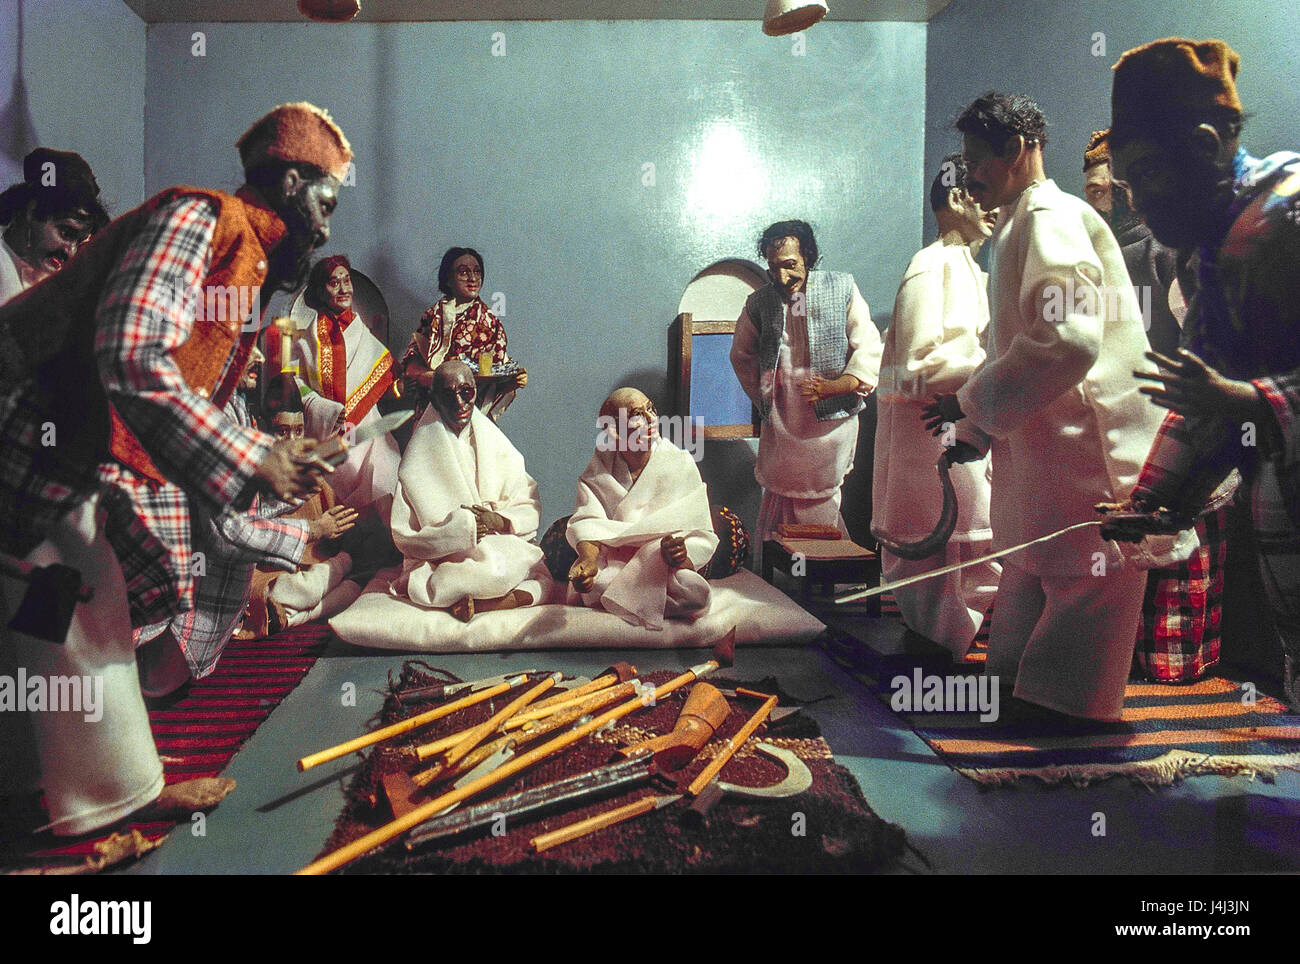 Glimpses of mahatma gandhi began fast for communal harmony, india, asia Stock Photo